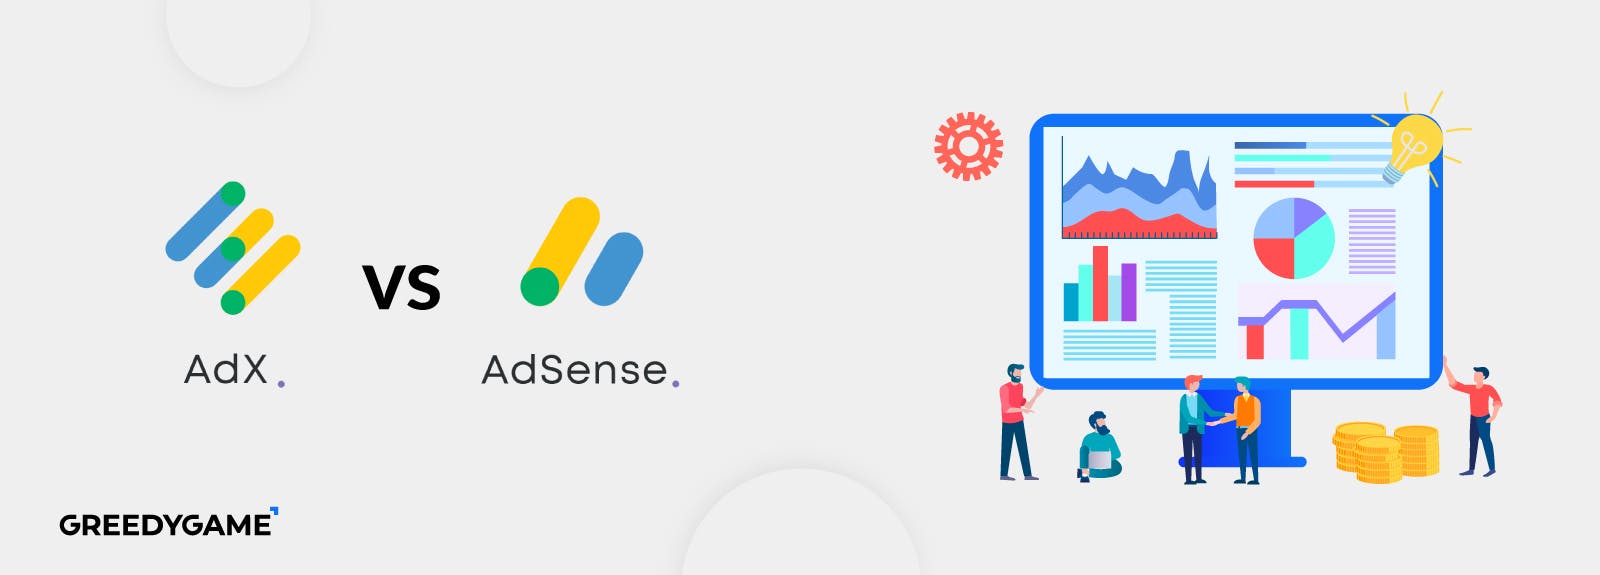 Google AdX vs Google Adsense 